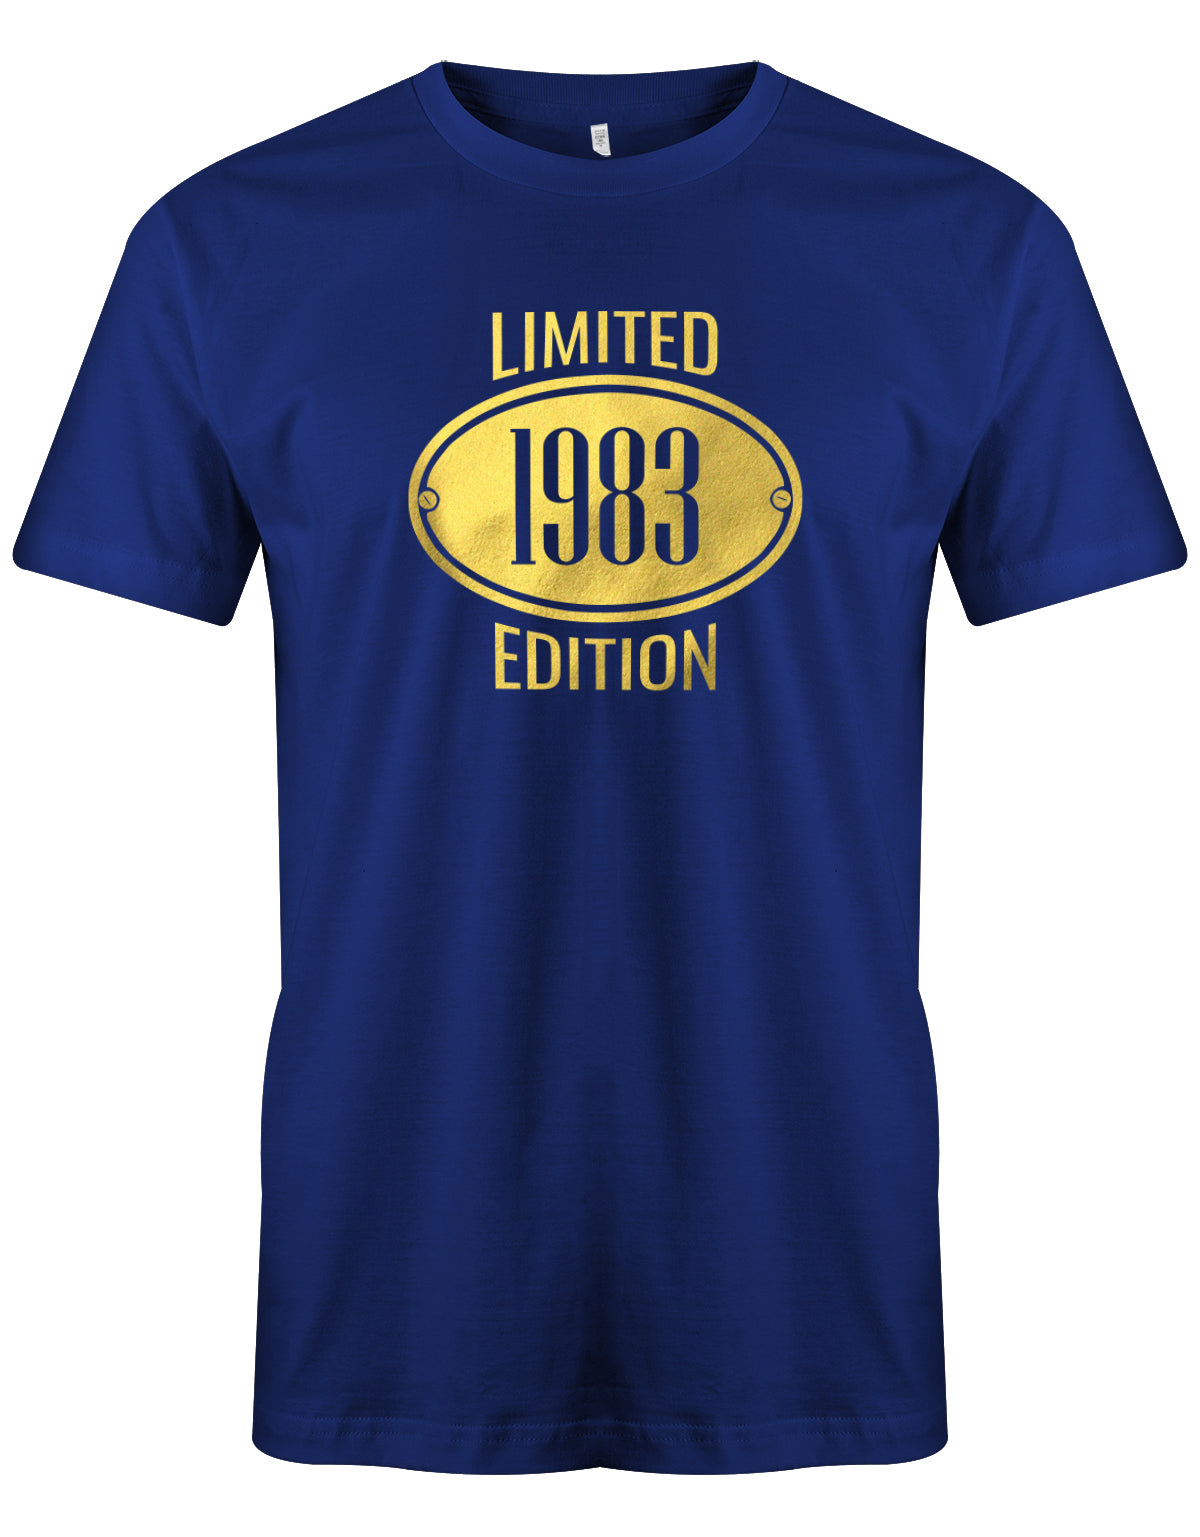 Limited Edition Gold 1983 - T-Shirt 40 Geburtstag Männer myShirtStore Royalblau